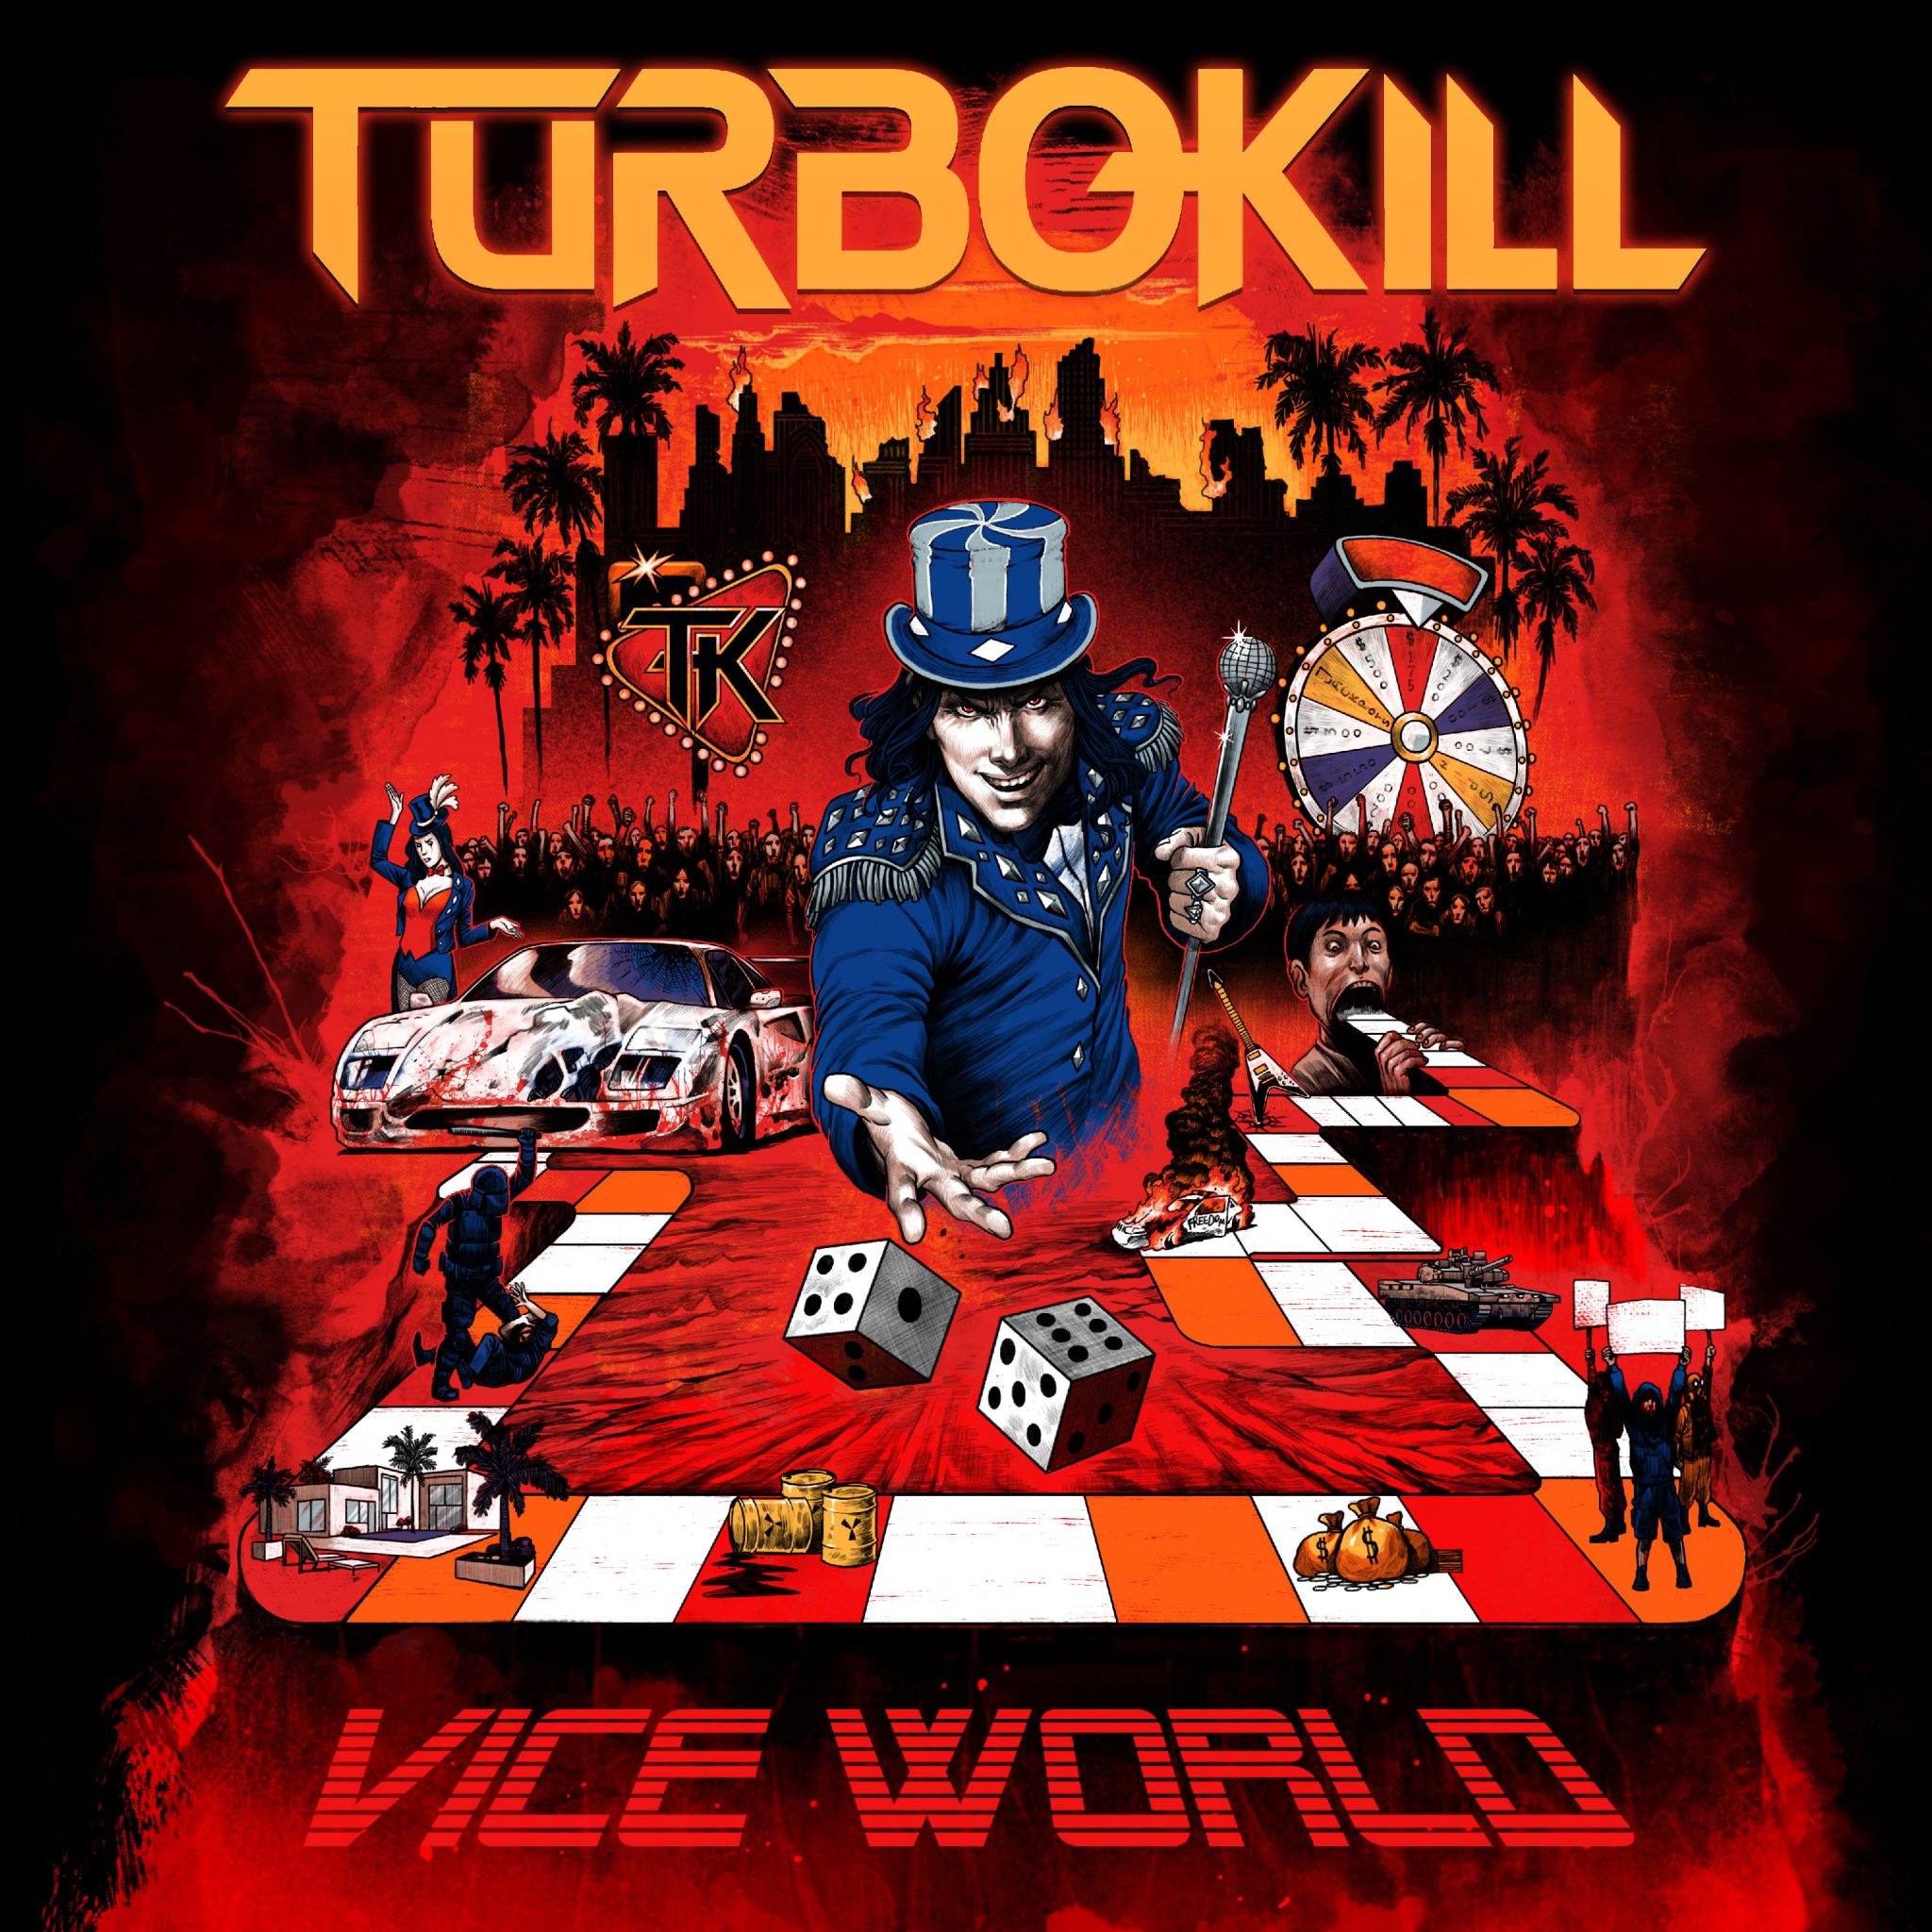 Turbokill - Vice World Album Art